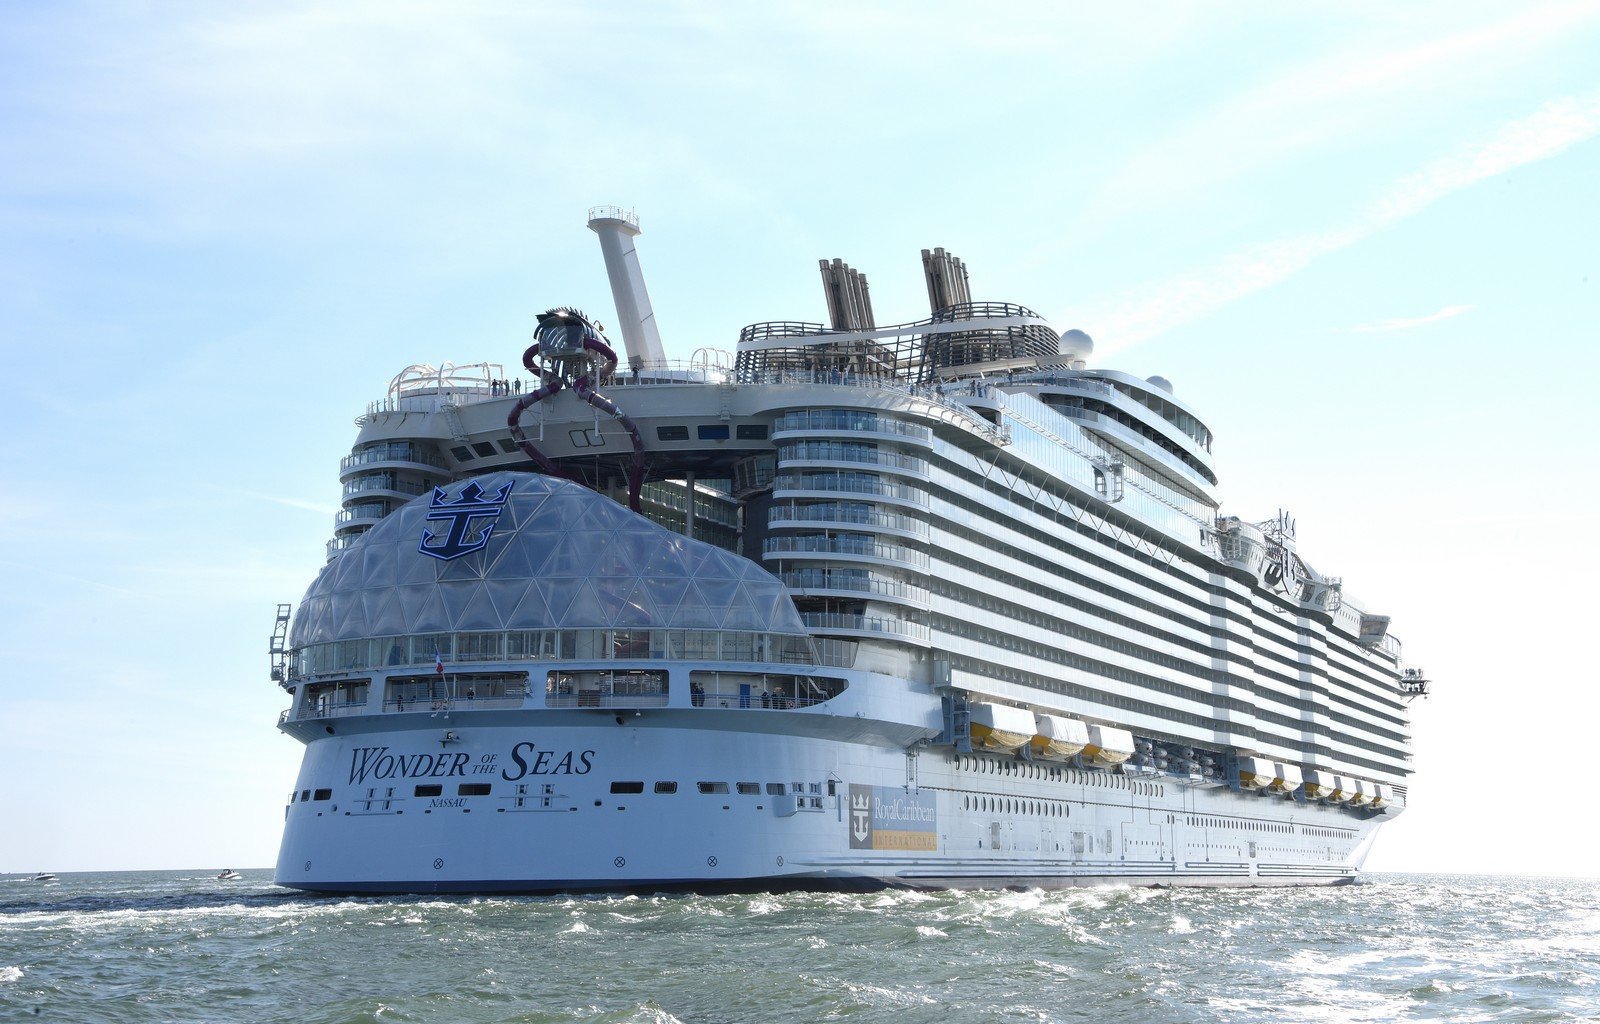 Wonder of the Seas to be delivered to Royal Caribbean tomorrow | Royal Caribbean Blog